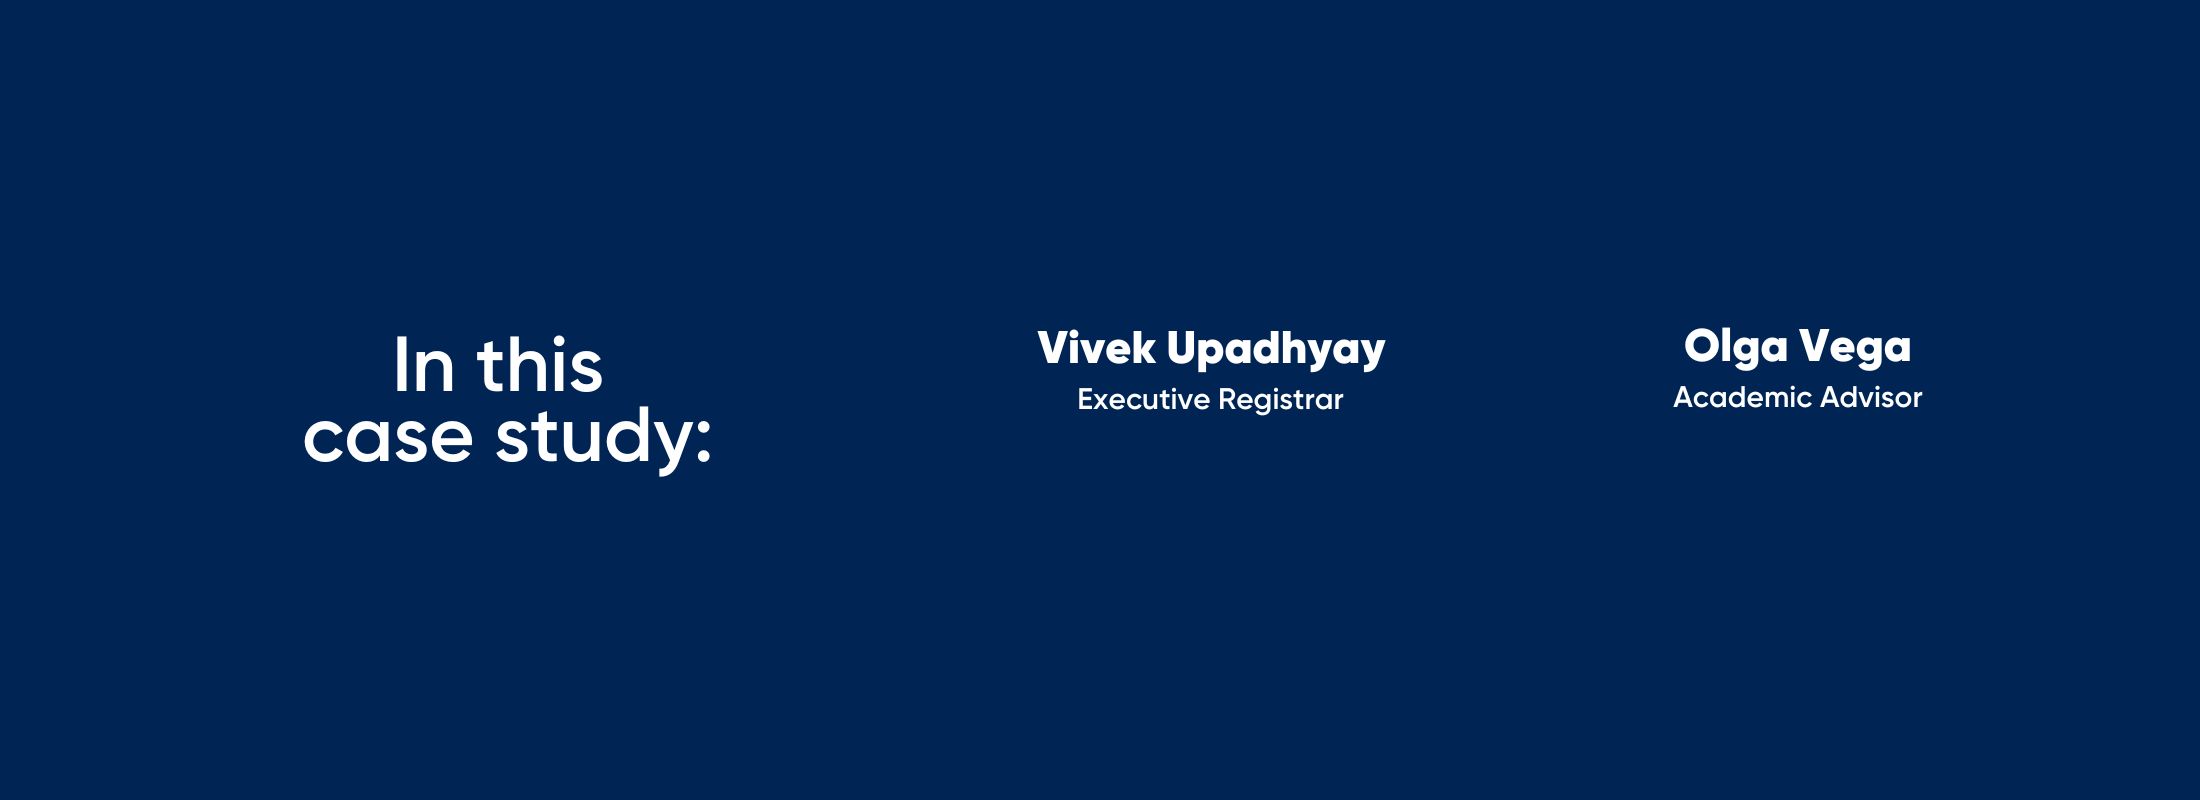 in this case study: vivek upadhyay, executive registrar